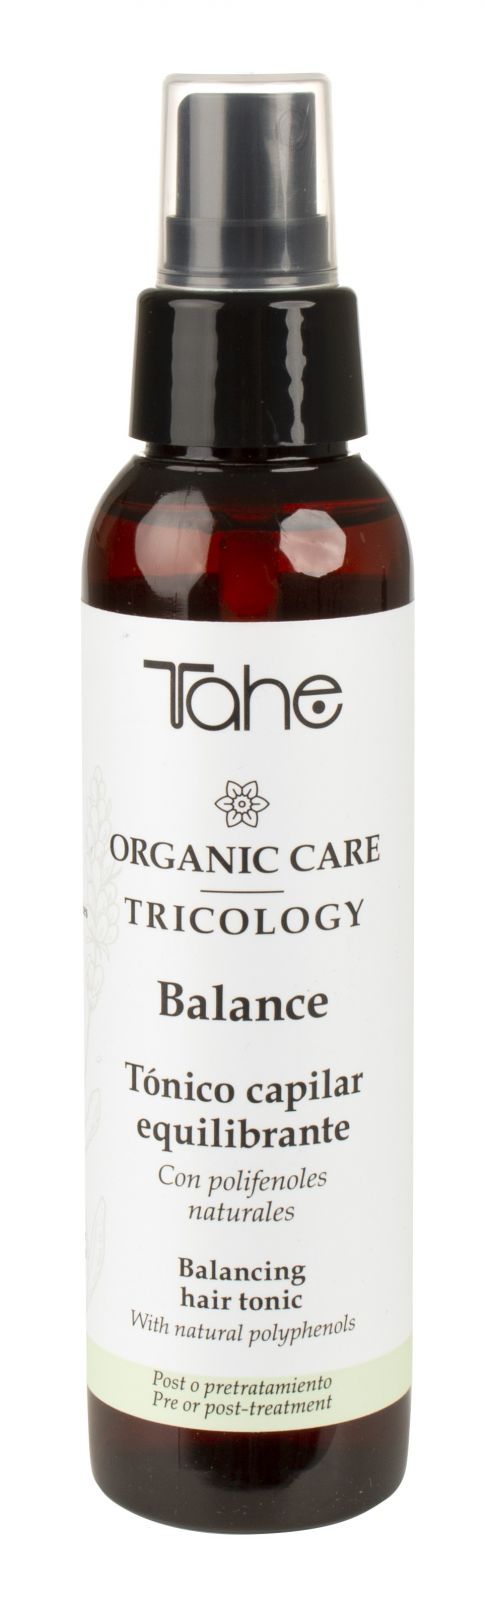 Tonico capilar equilibrante Balance (125 ml) TAHE